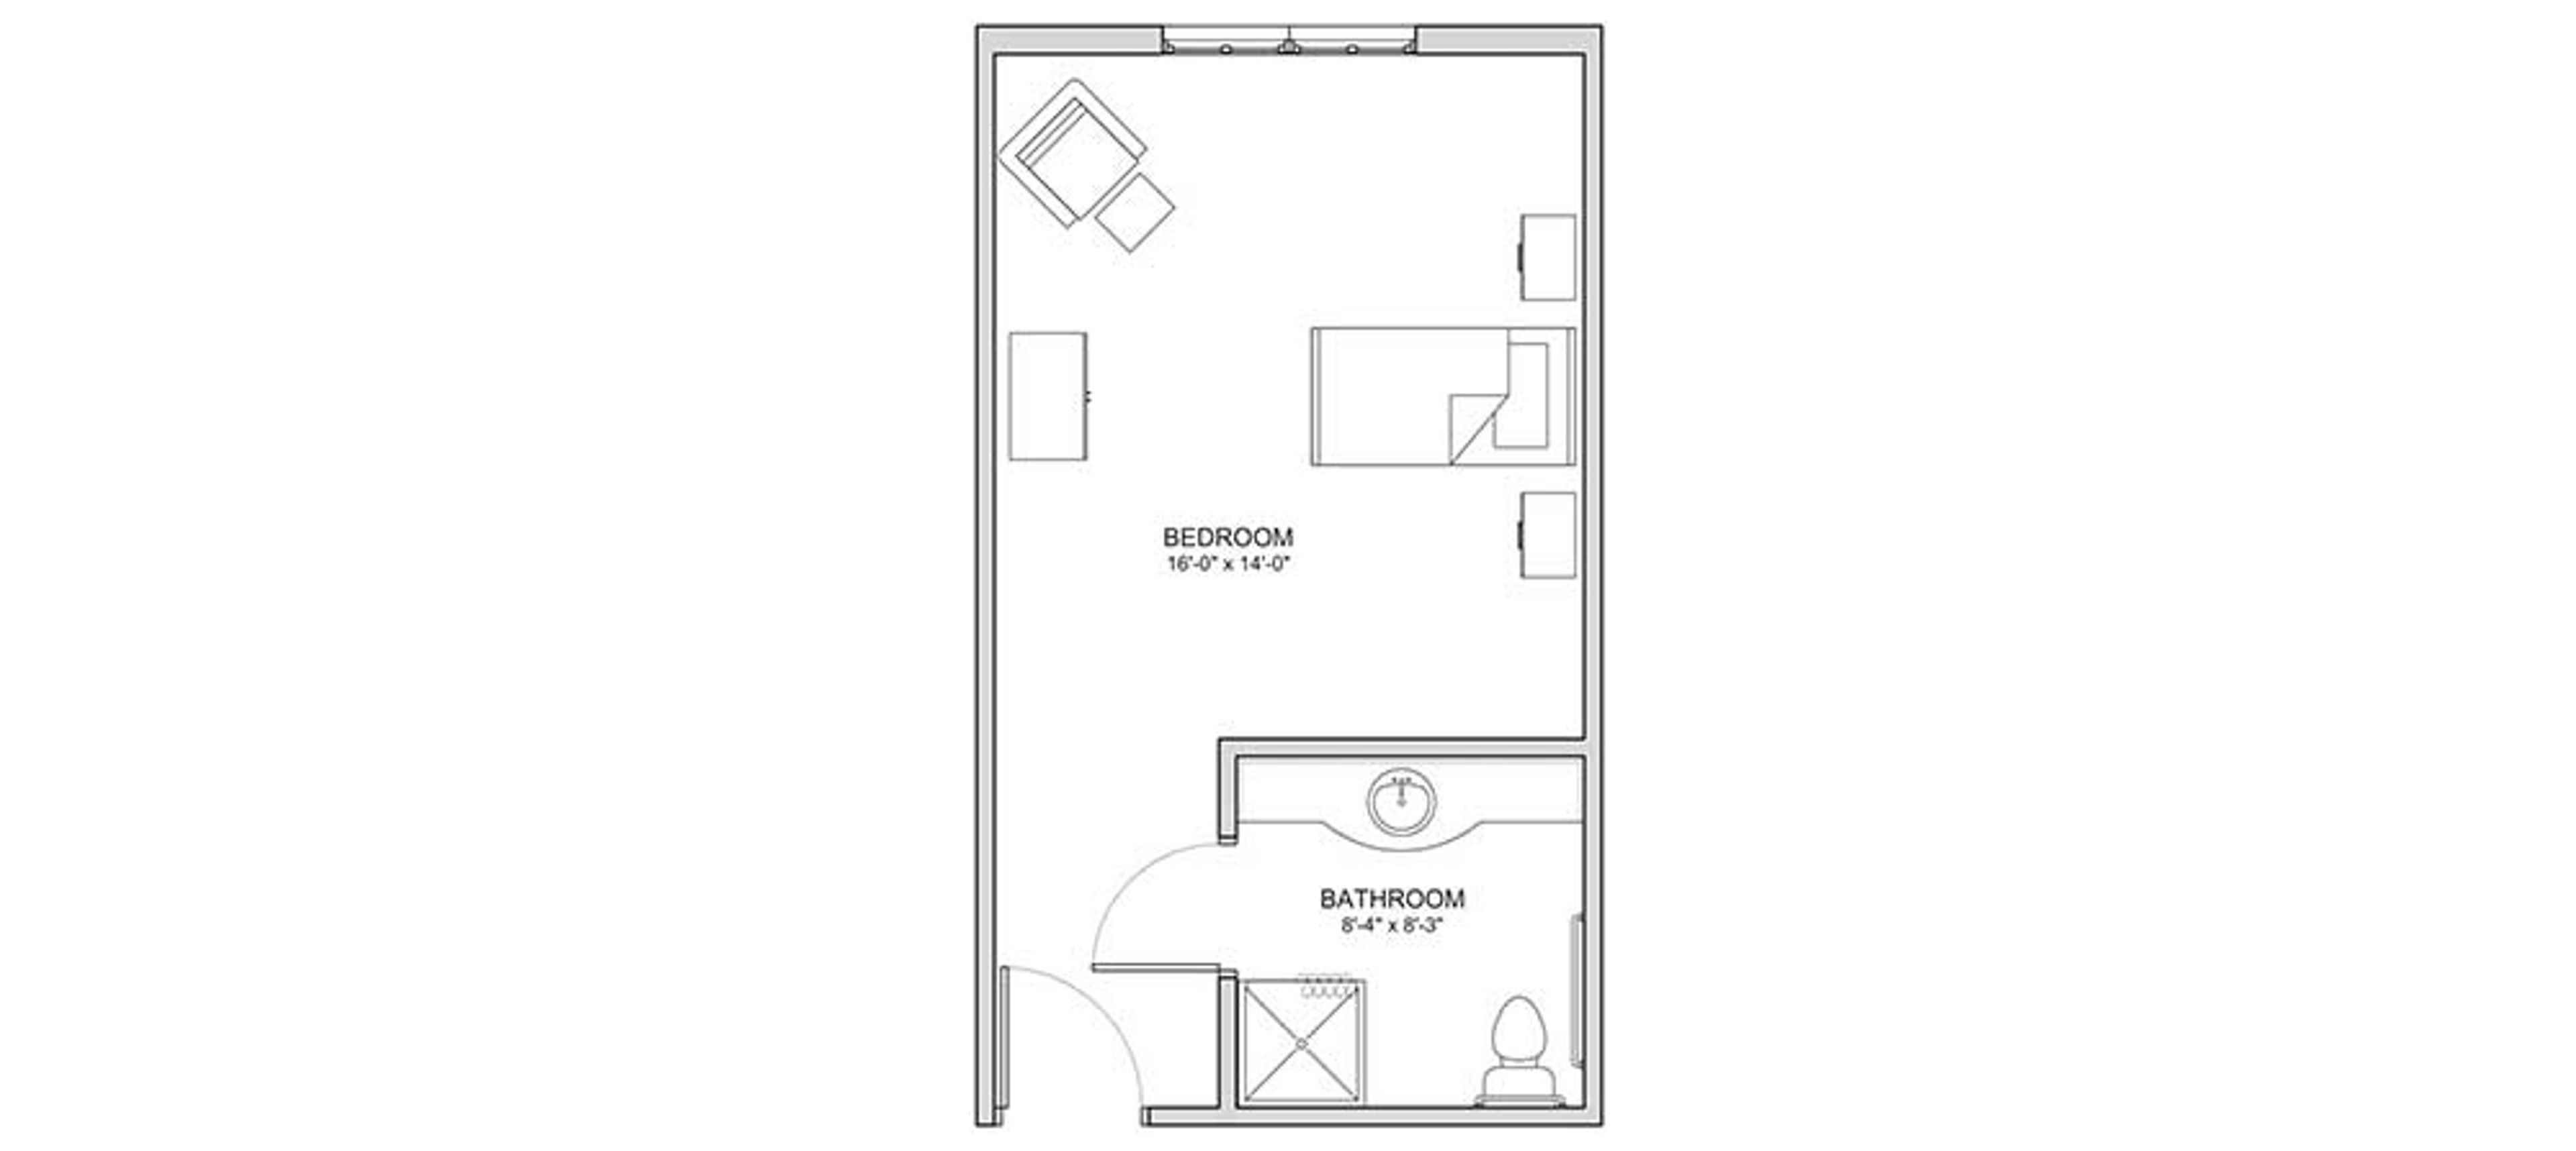 Floorplan - The Auberge at Kingwood - 1 bed, 1 bath, Semi-private Memory Care